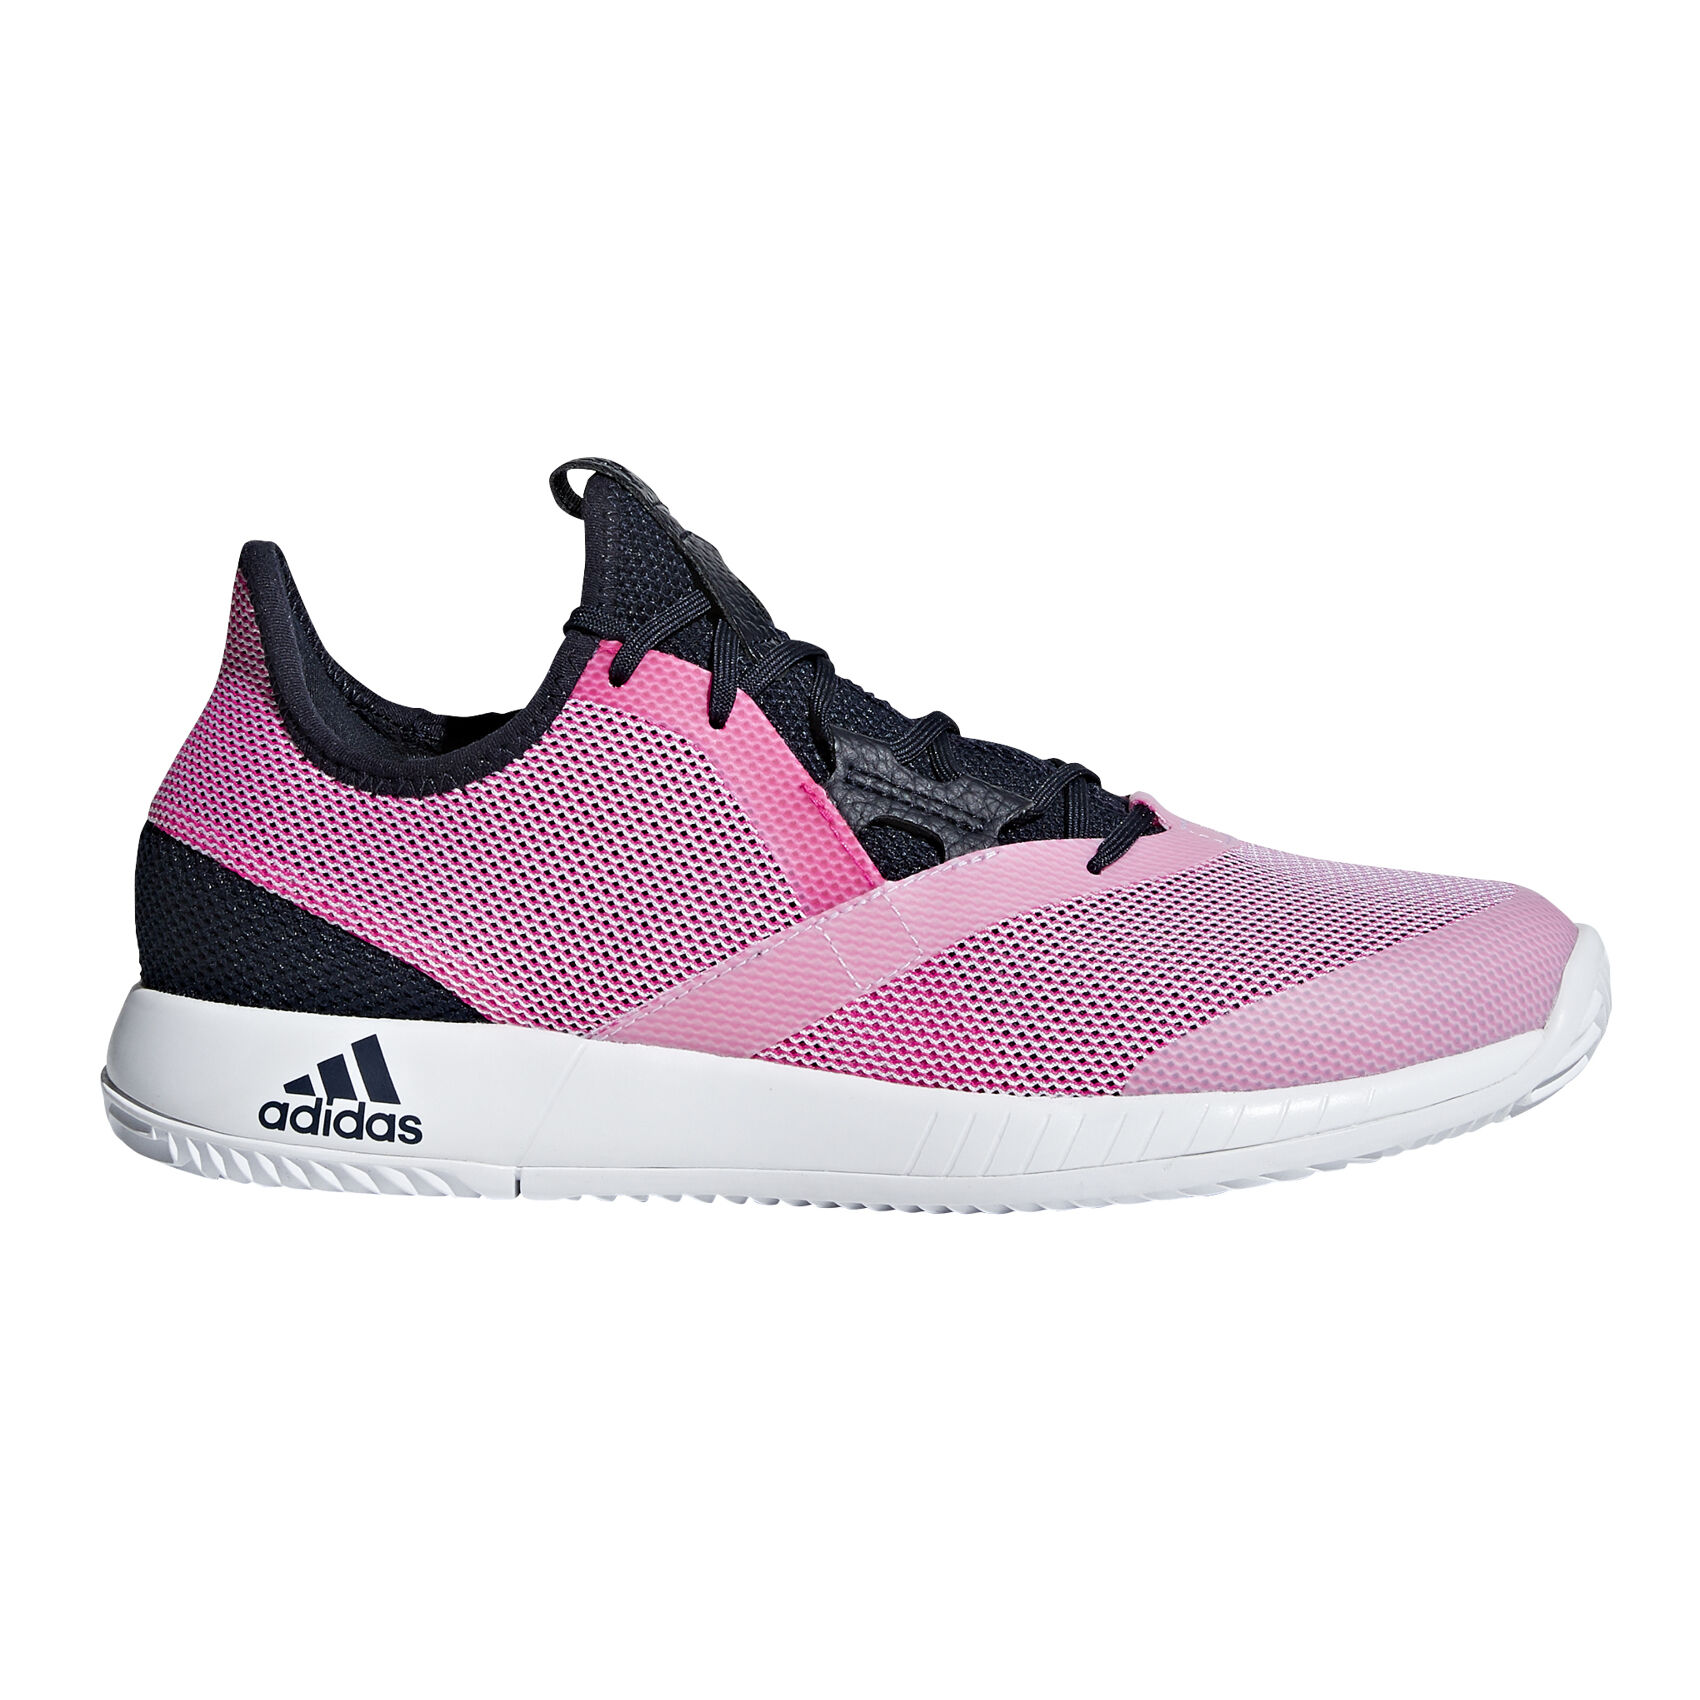 adidas adizero defiant bounce women's tennis shoe